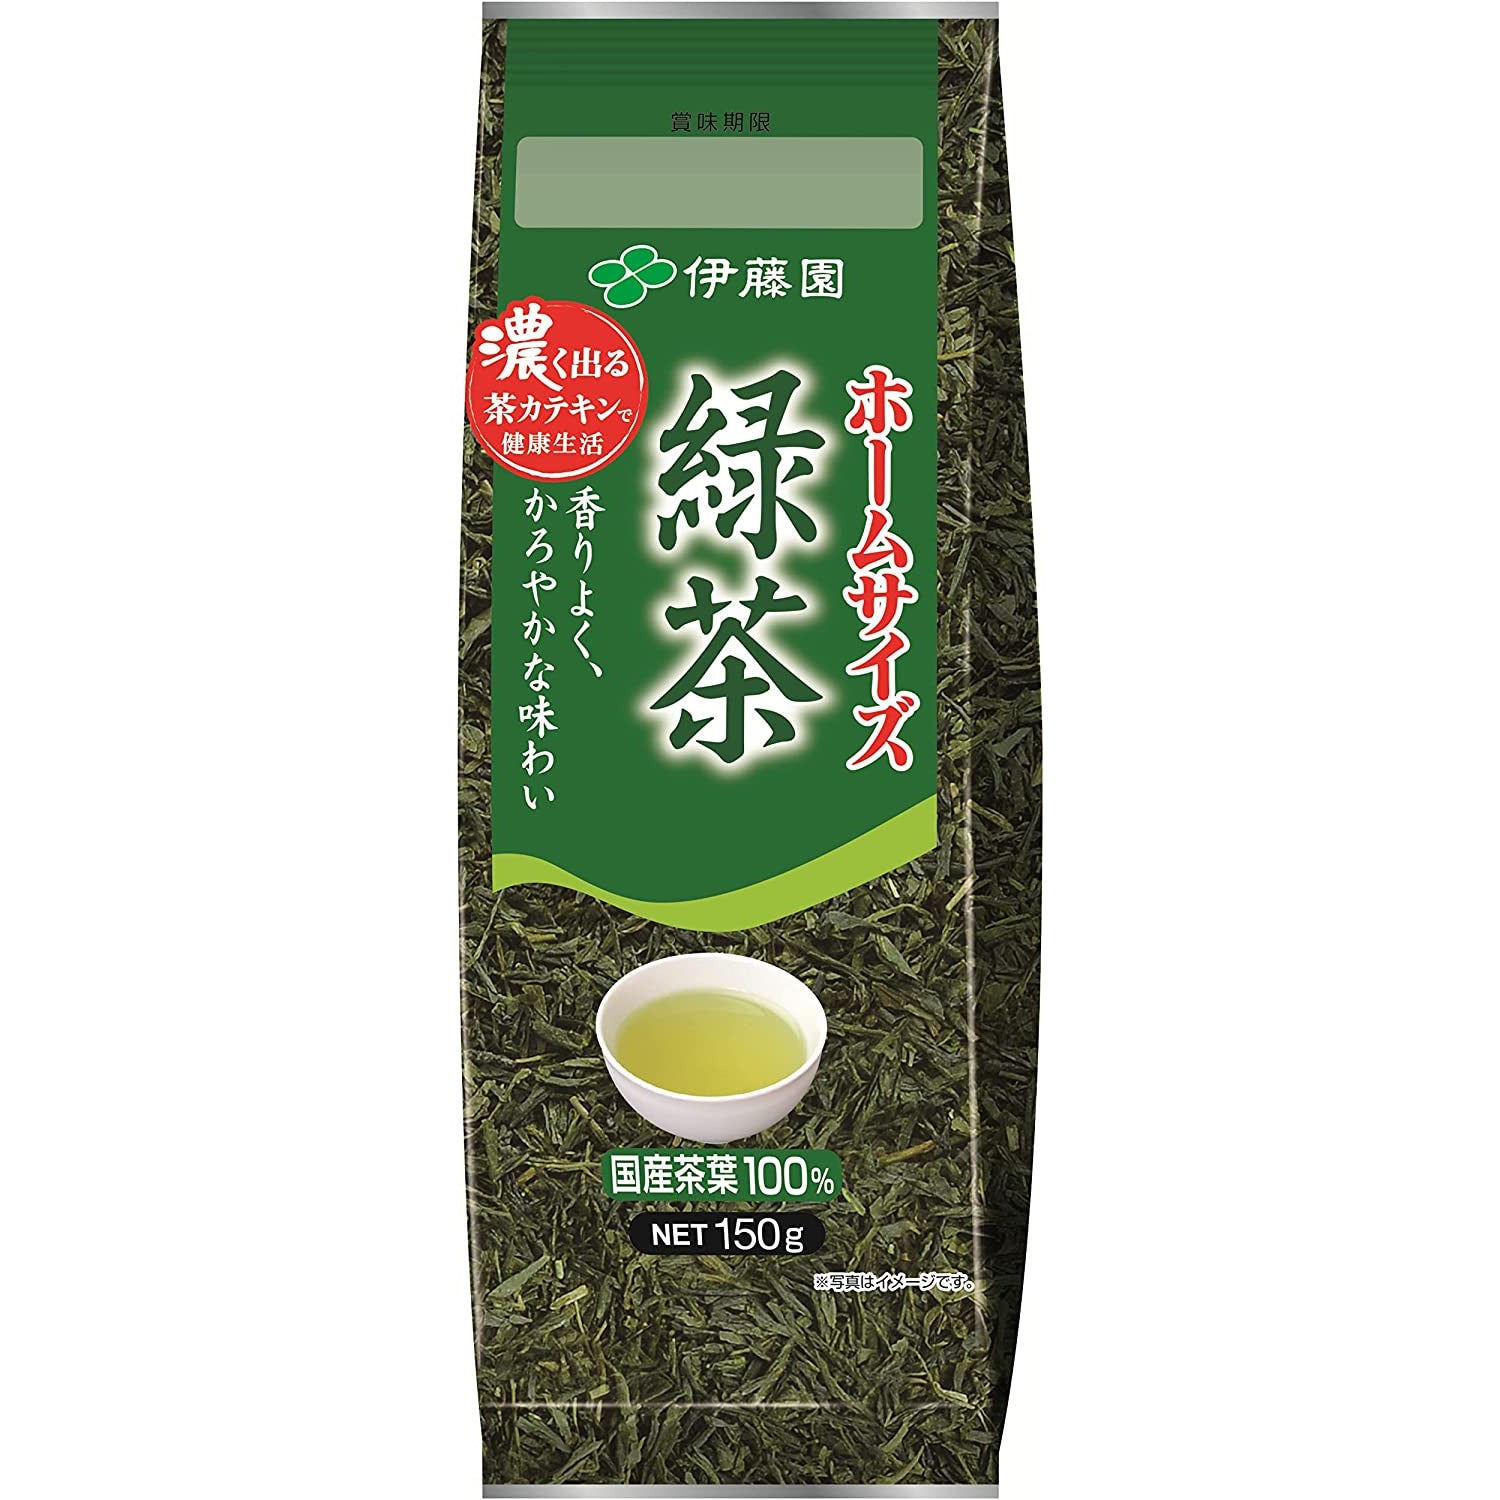 Itoen home size green tea 150g